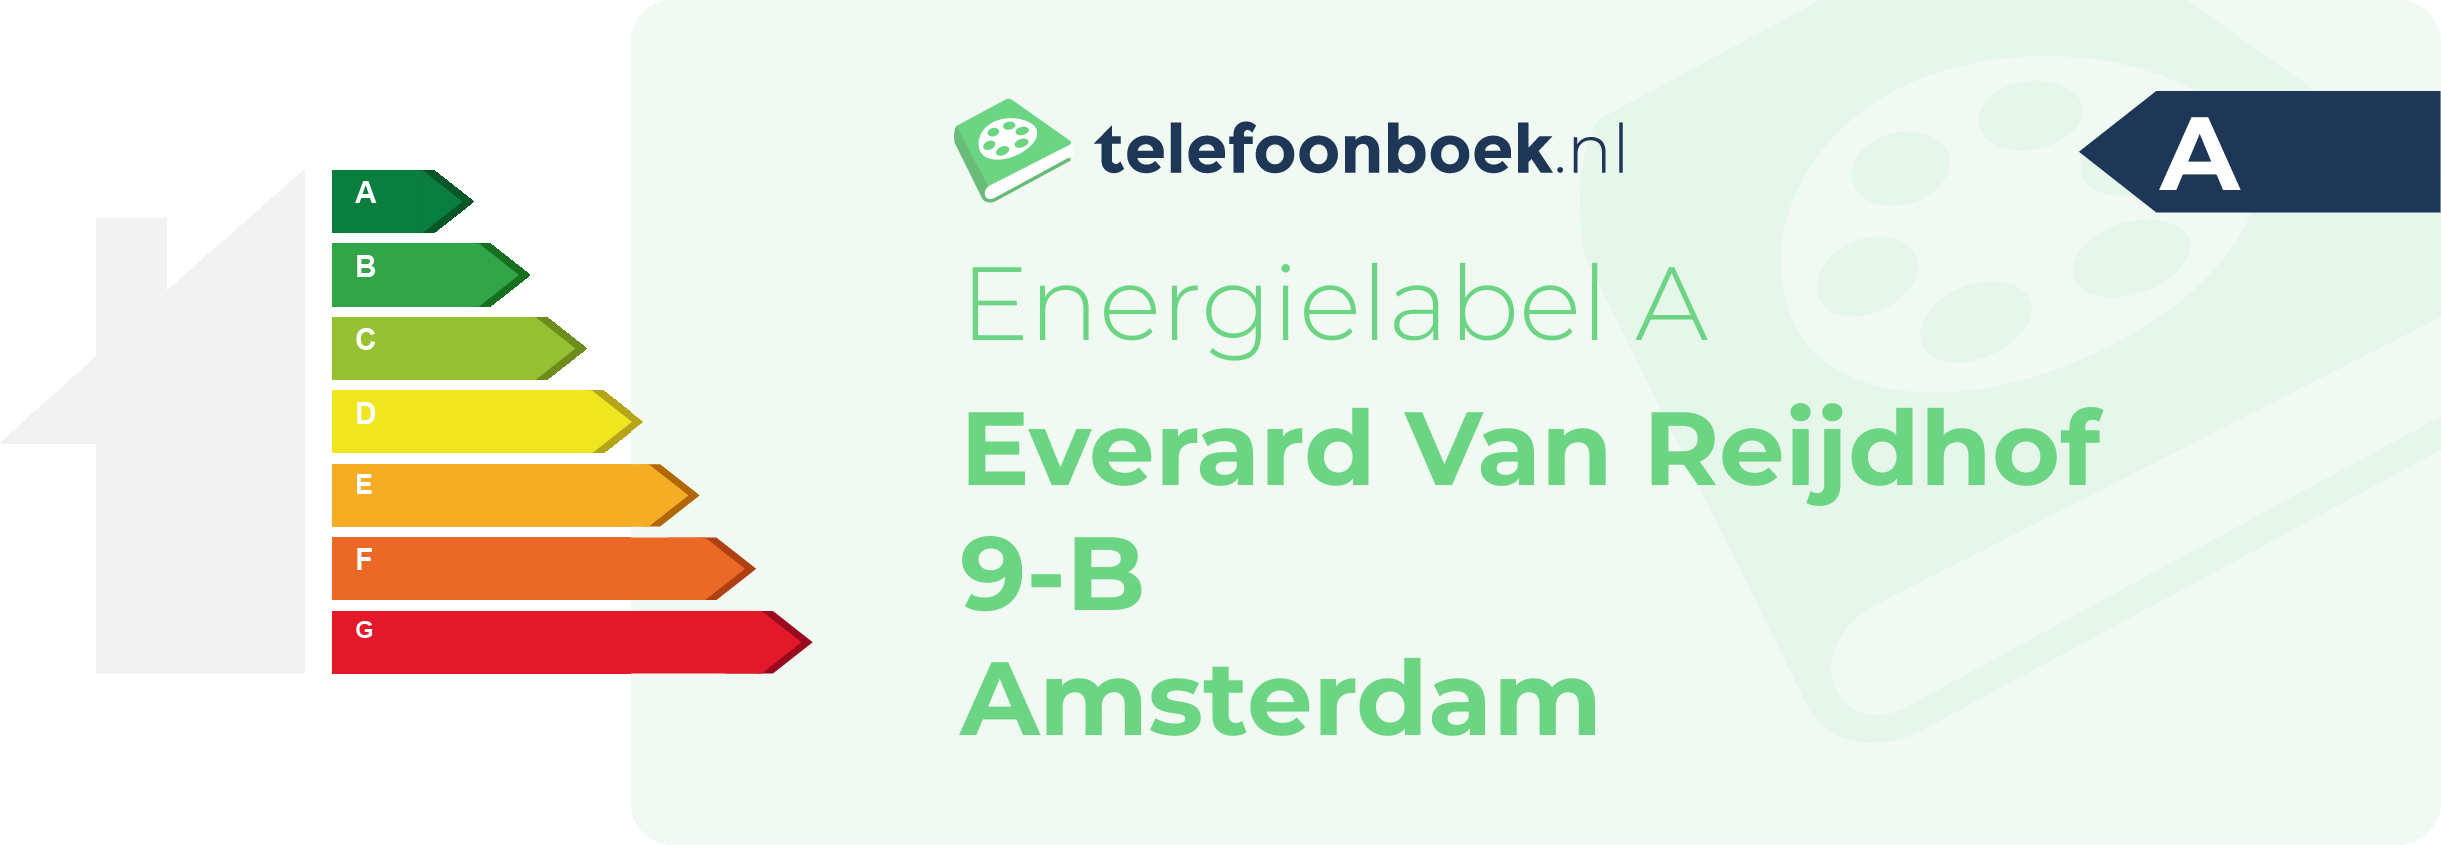 Energielabel Everard Van Reijdhof 9-B Amsterdam